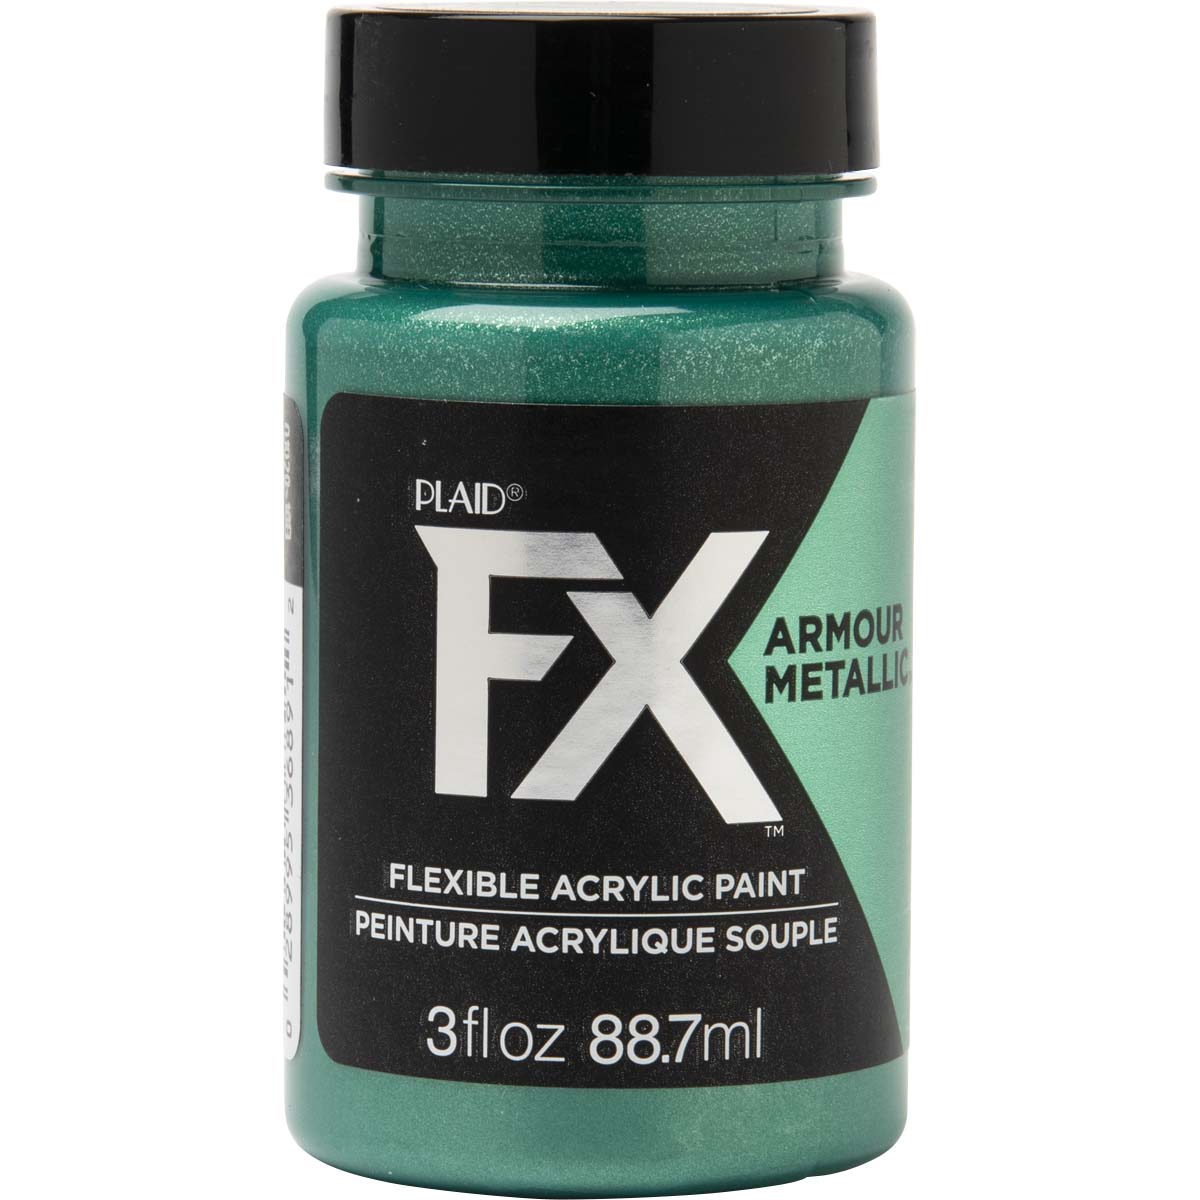 PlaidFX Armour Metal Flexible Acrylic Paint - Emerald, 3 oz. - 36891